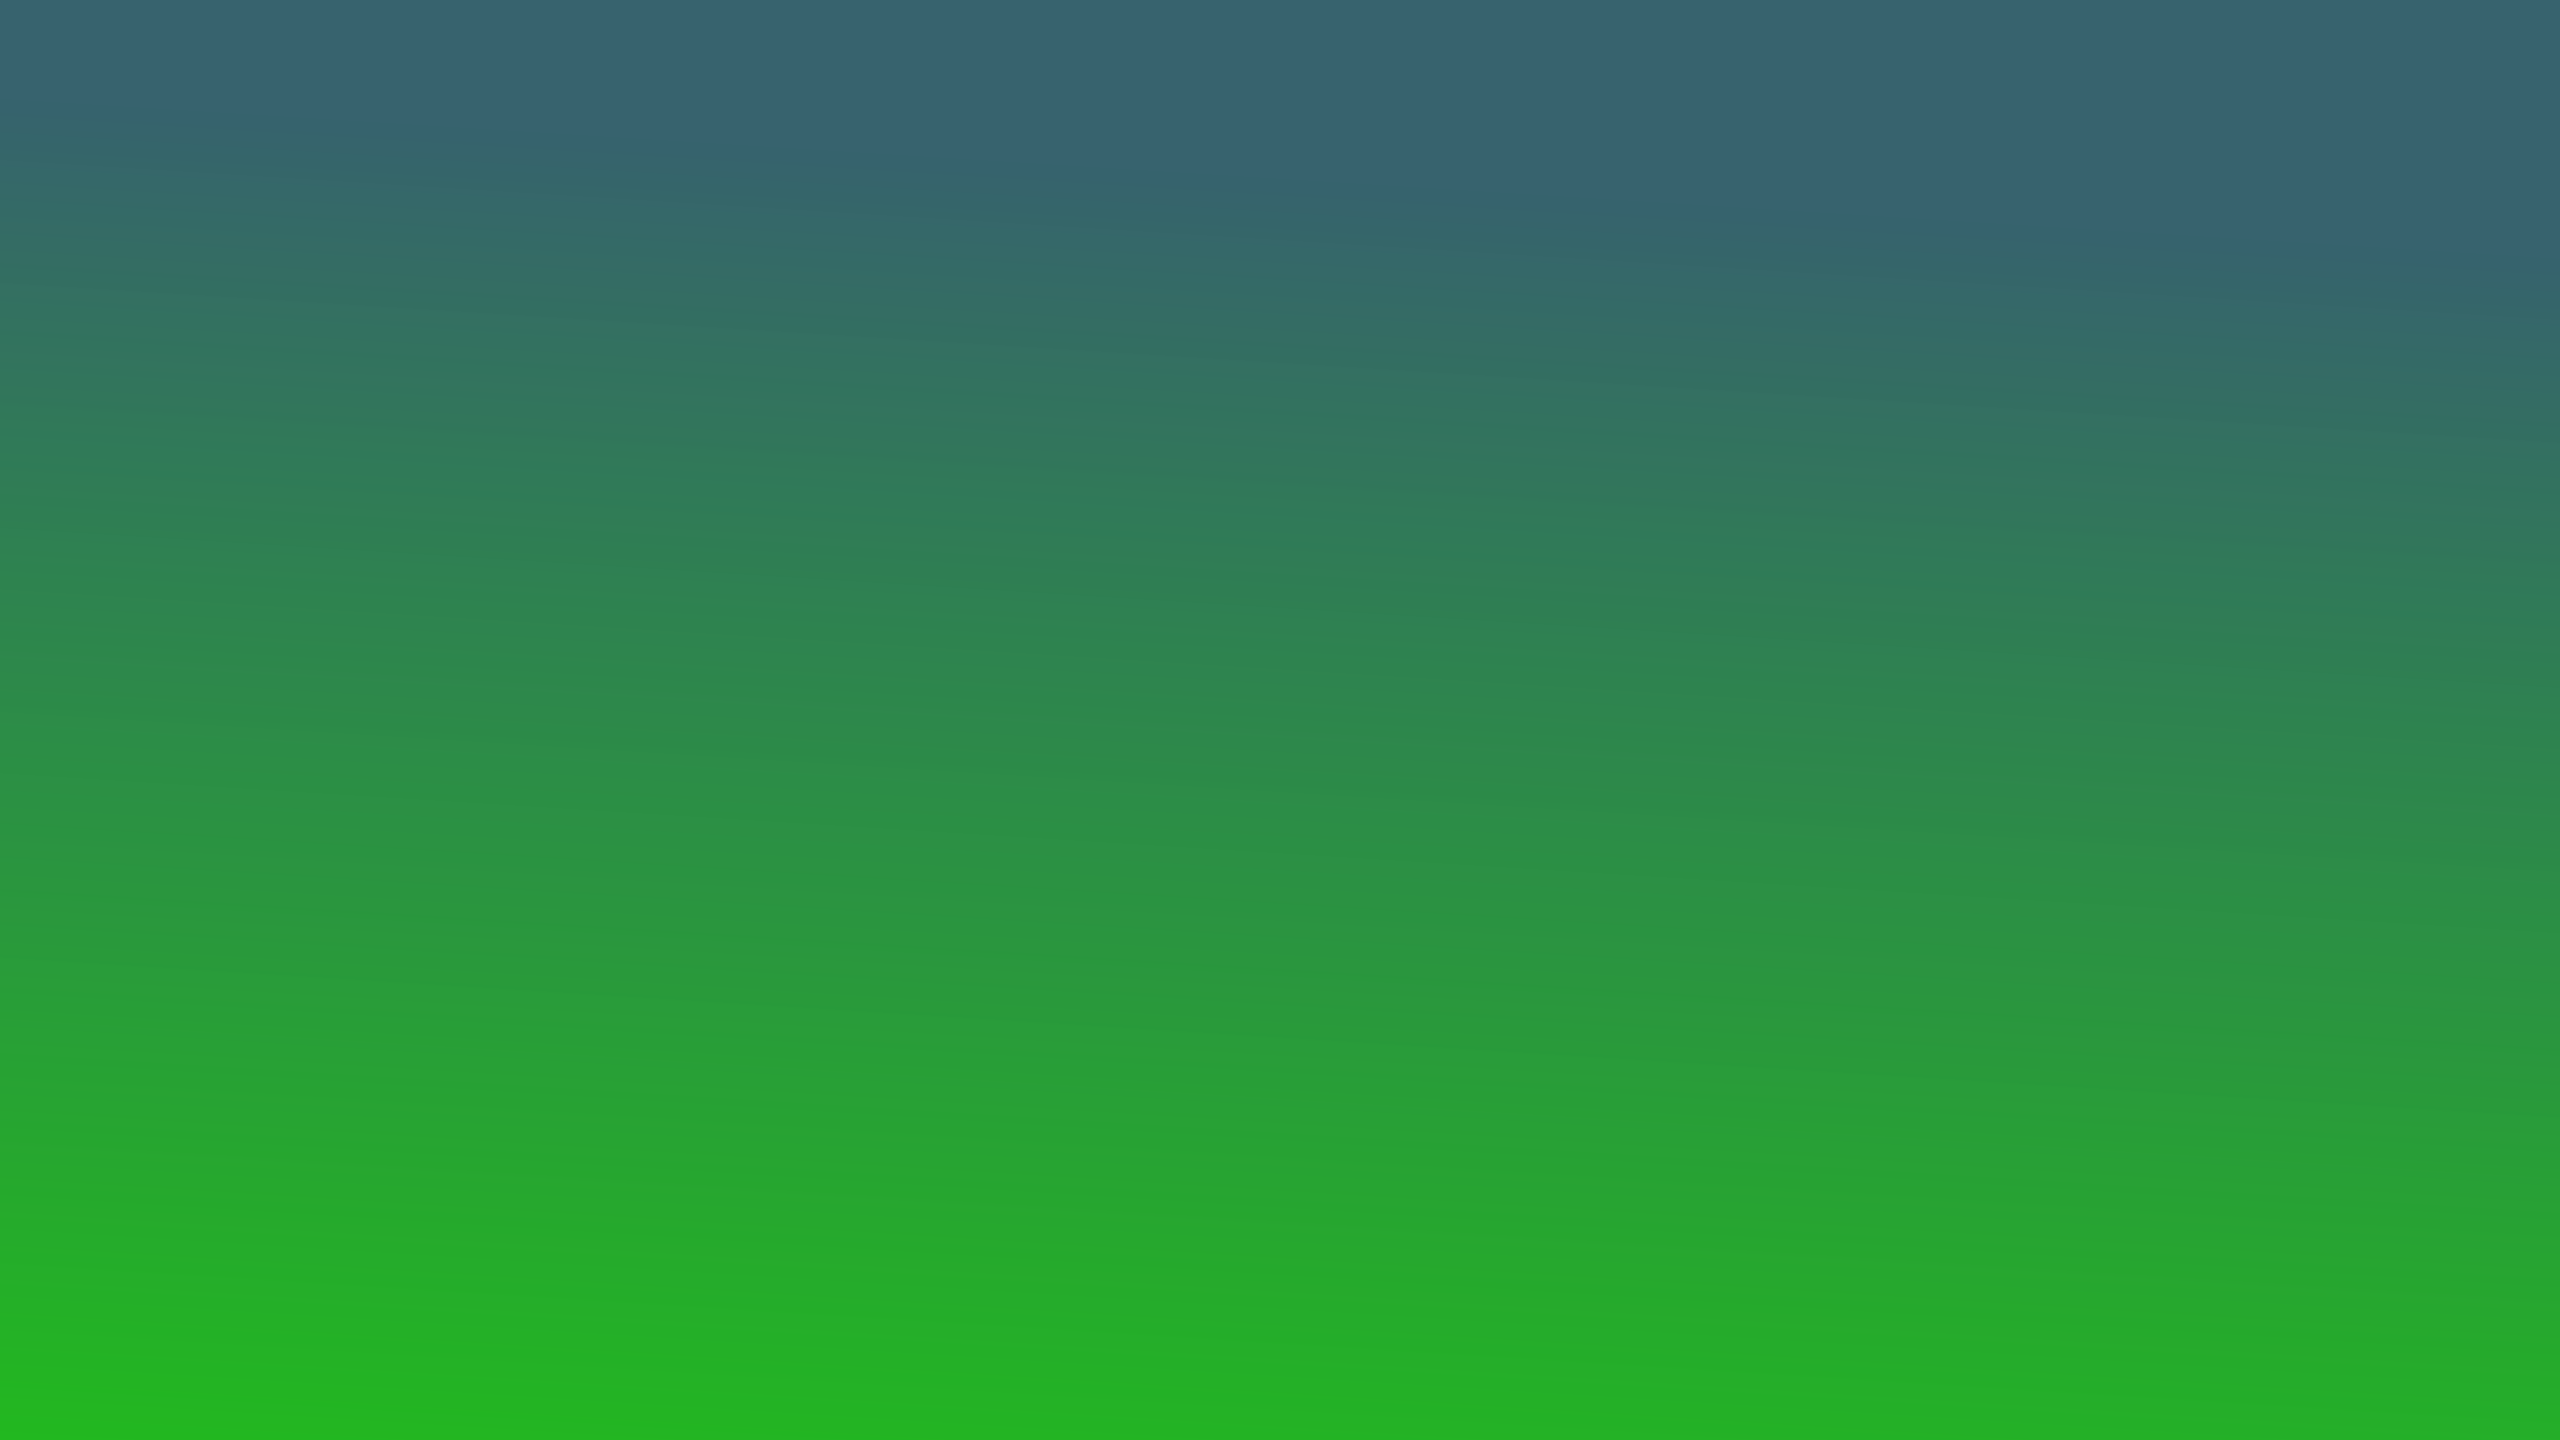 youtube wallpaper,green,blue,turquoise,aqua,grass